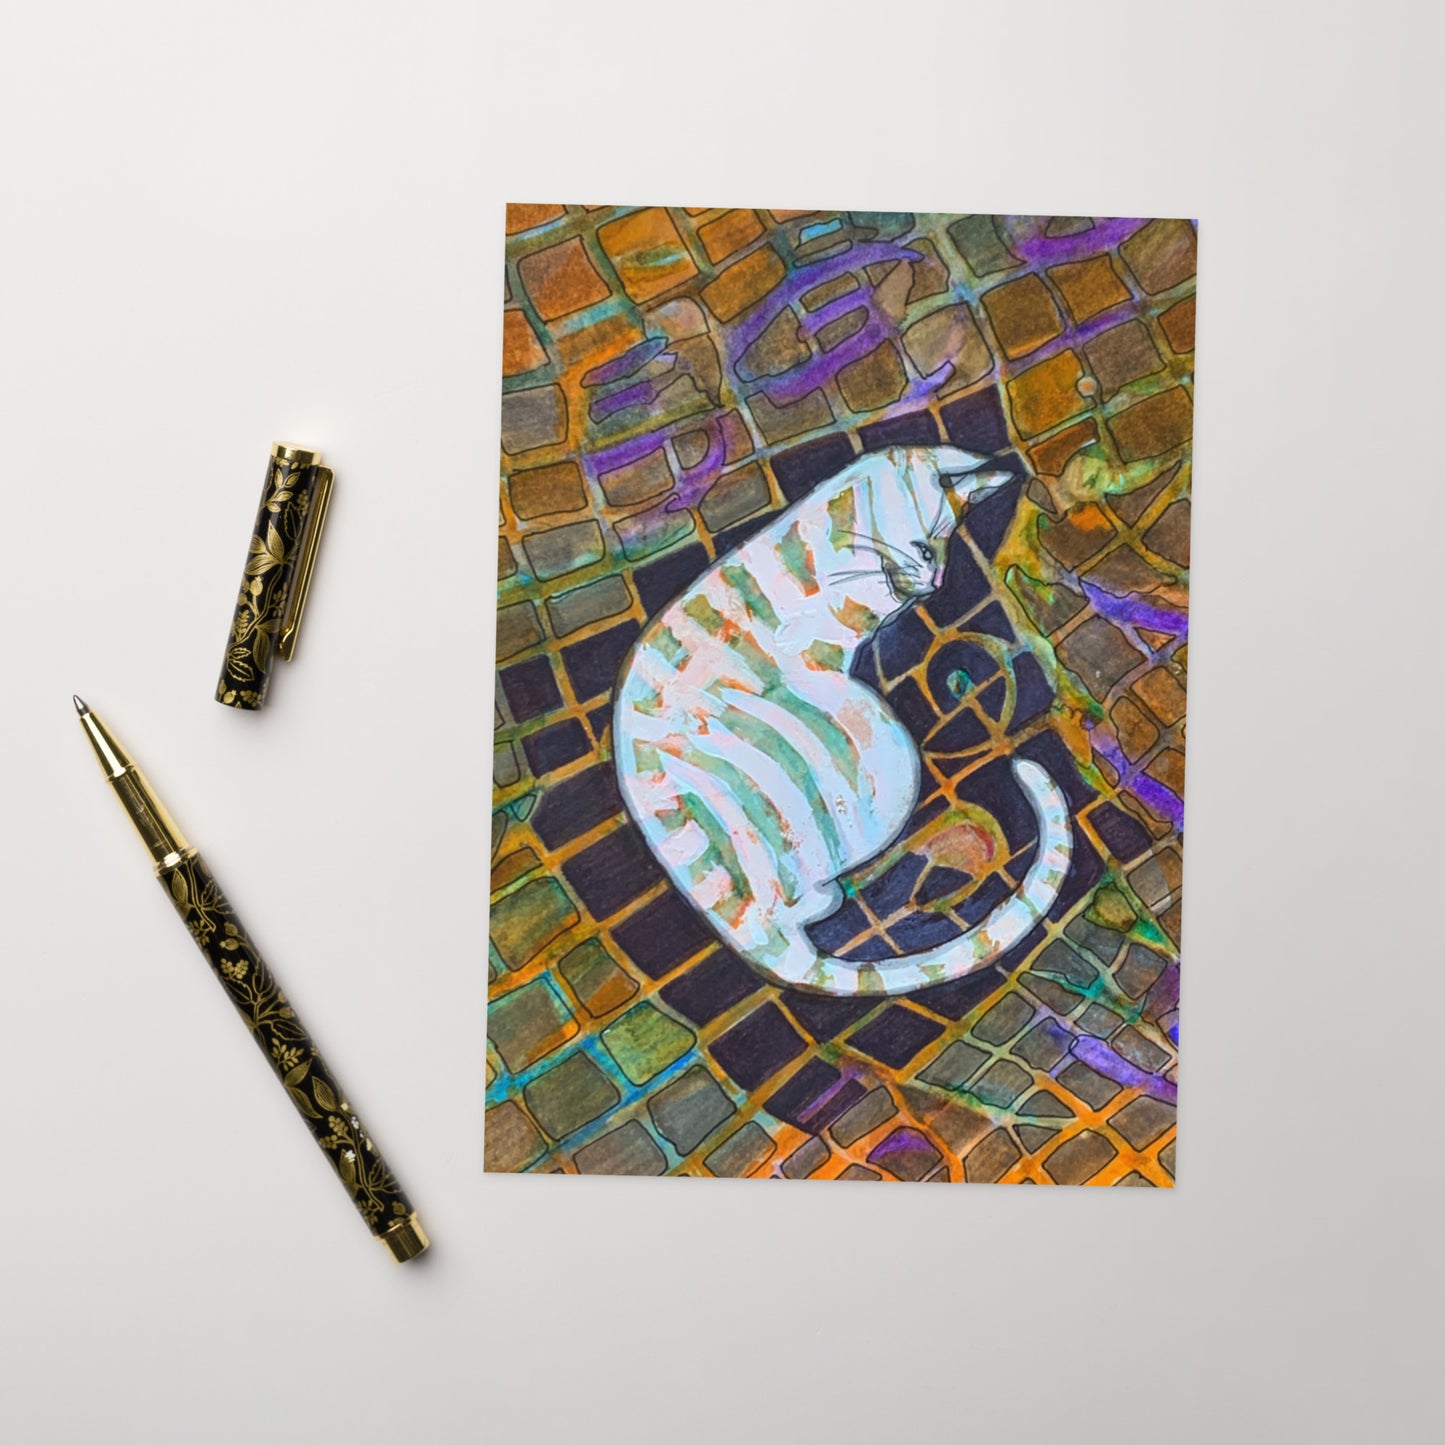 Cat Bricks Greeting card - Art Love Decor